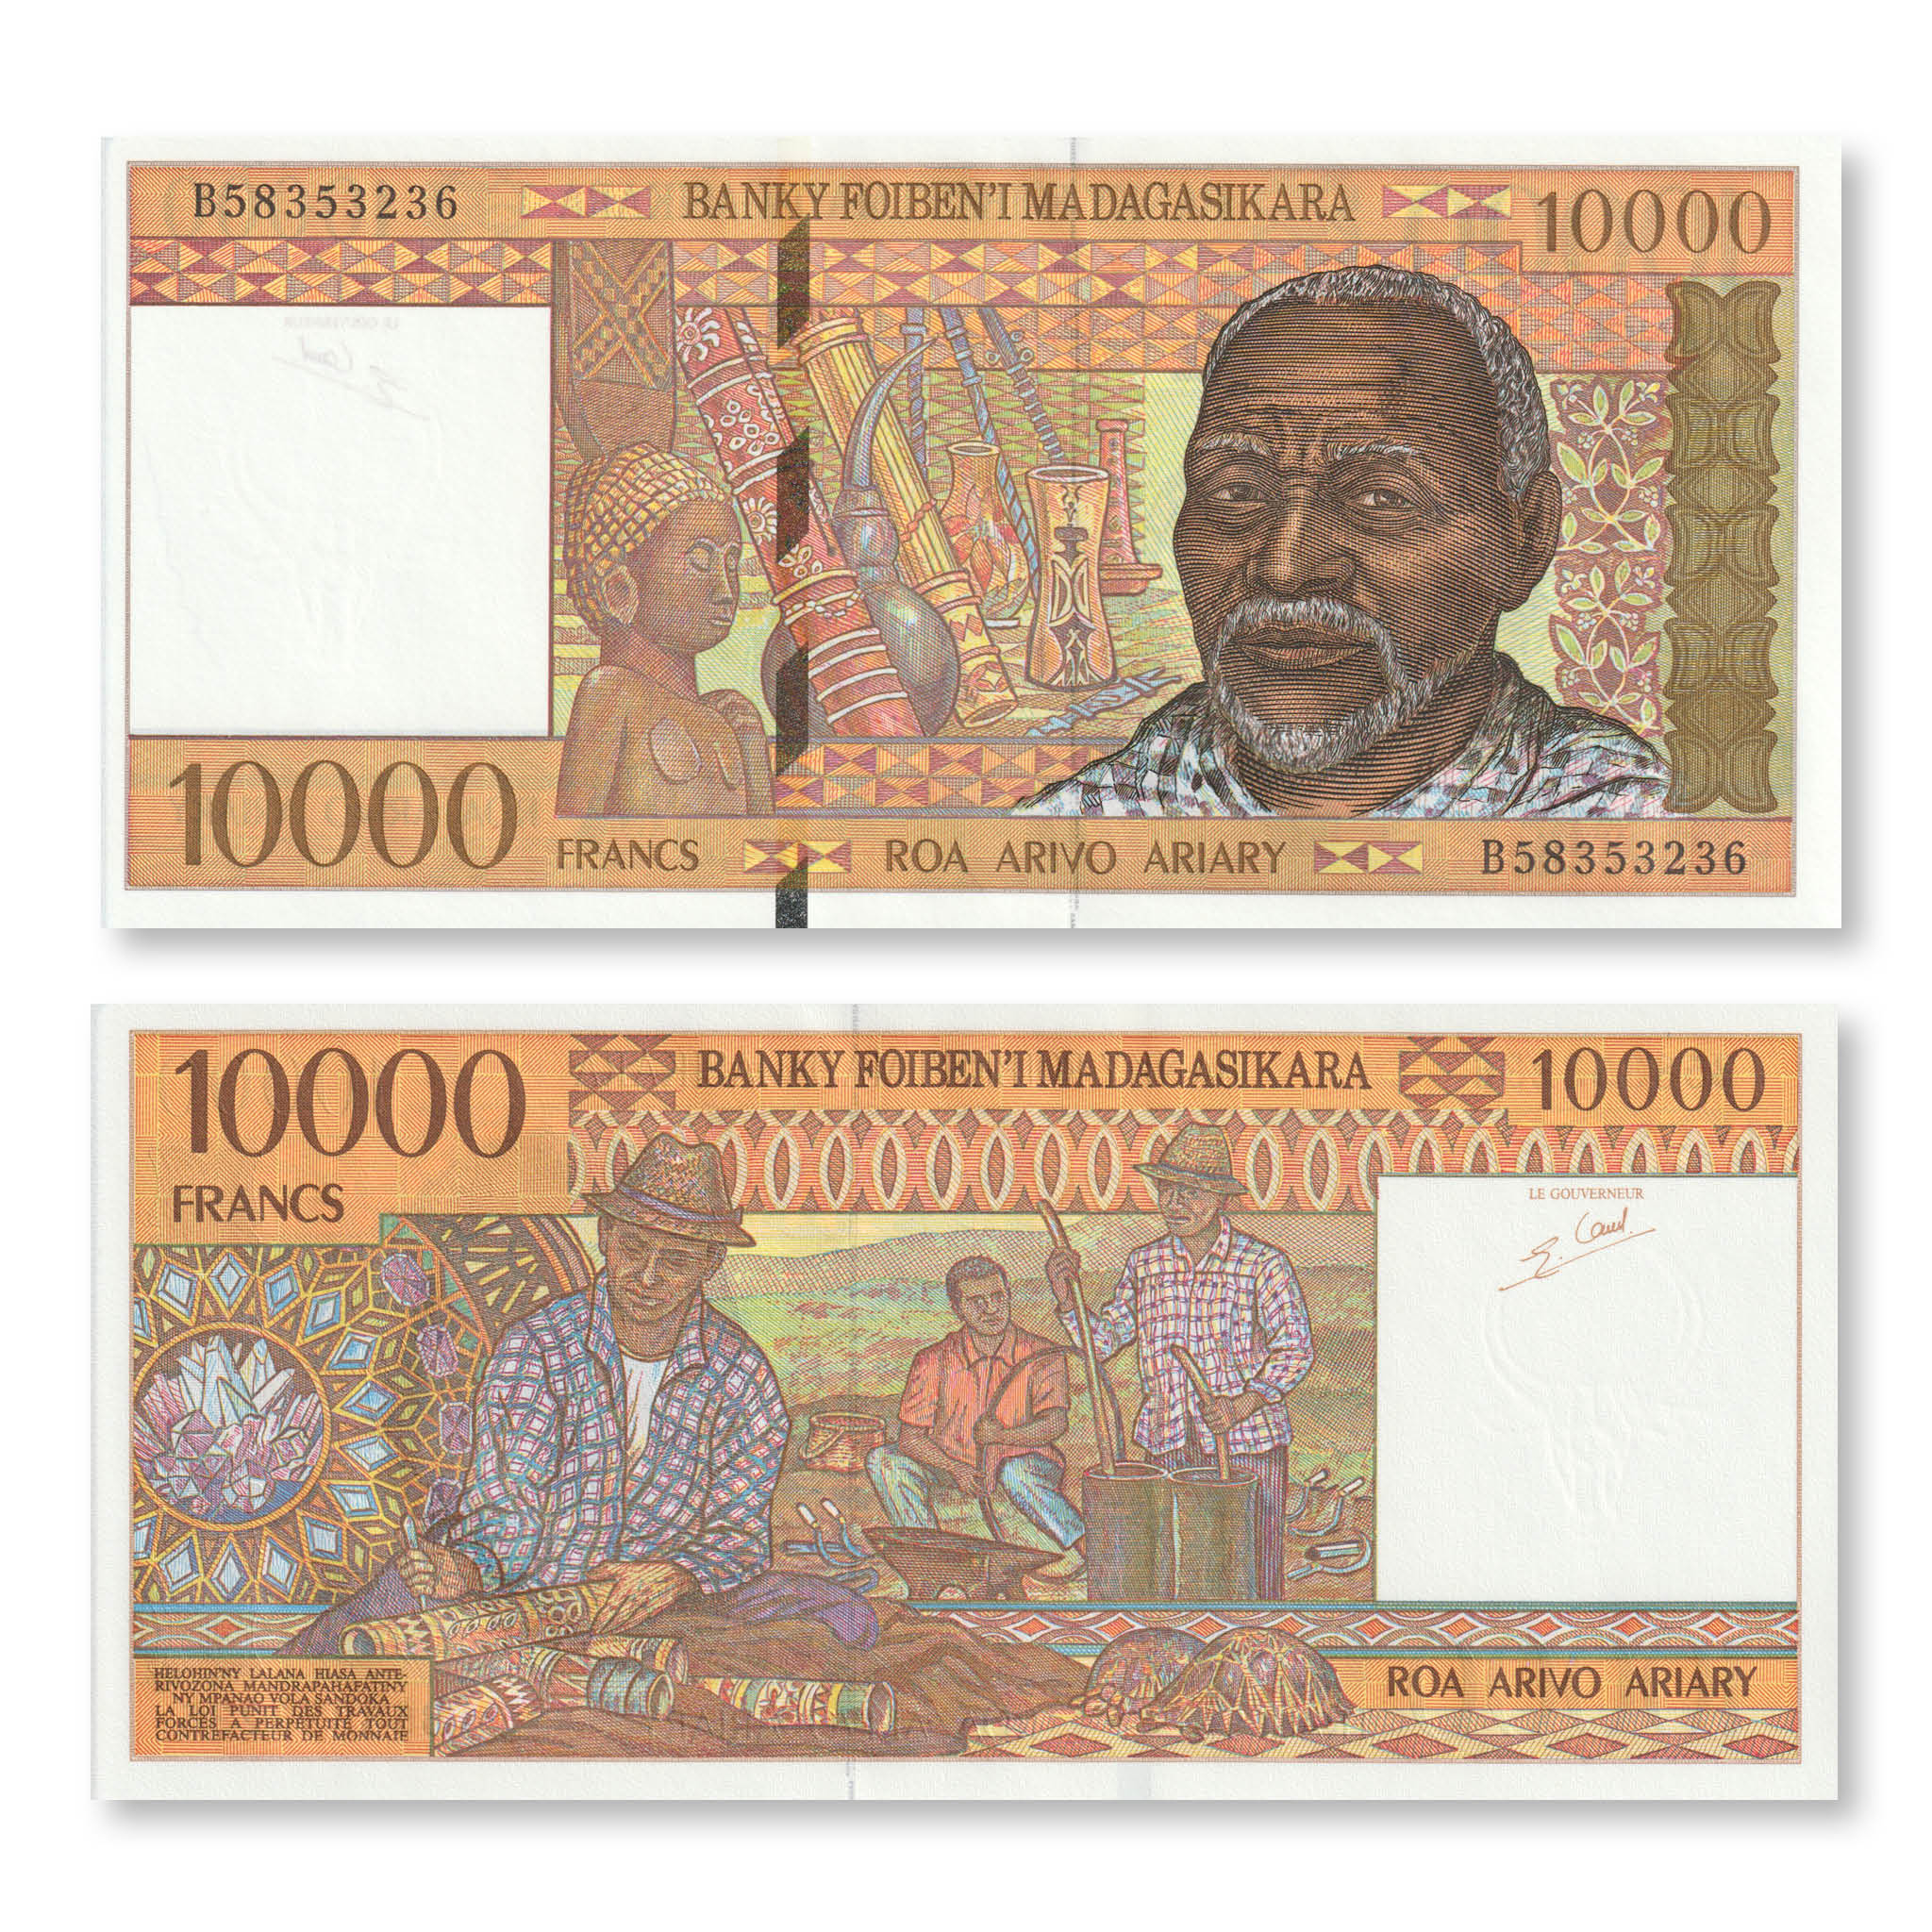 Madagascar 10000 Francs, 1995, B315b, P79b, UNC - Robert's World Money - World Banknotes